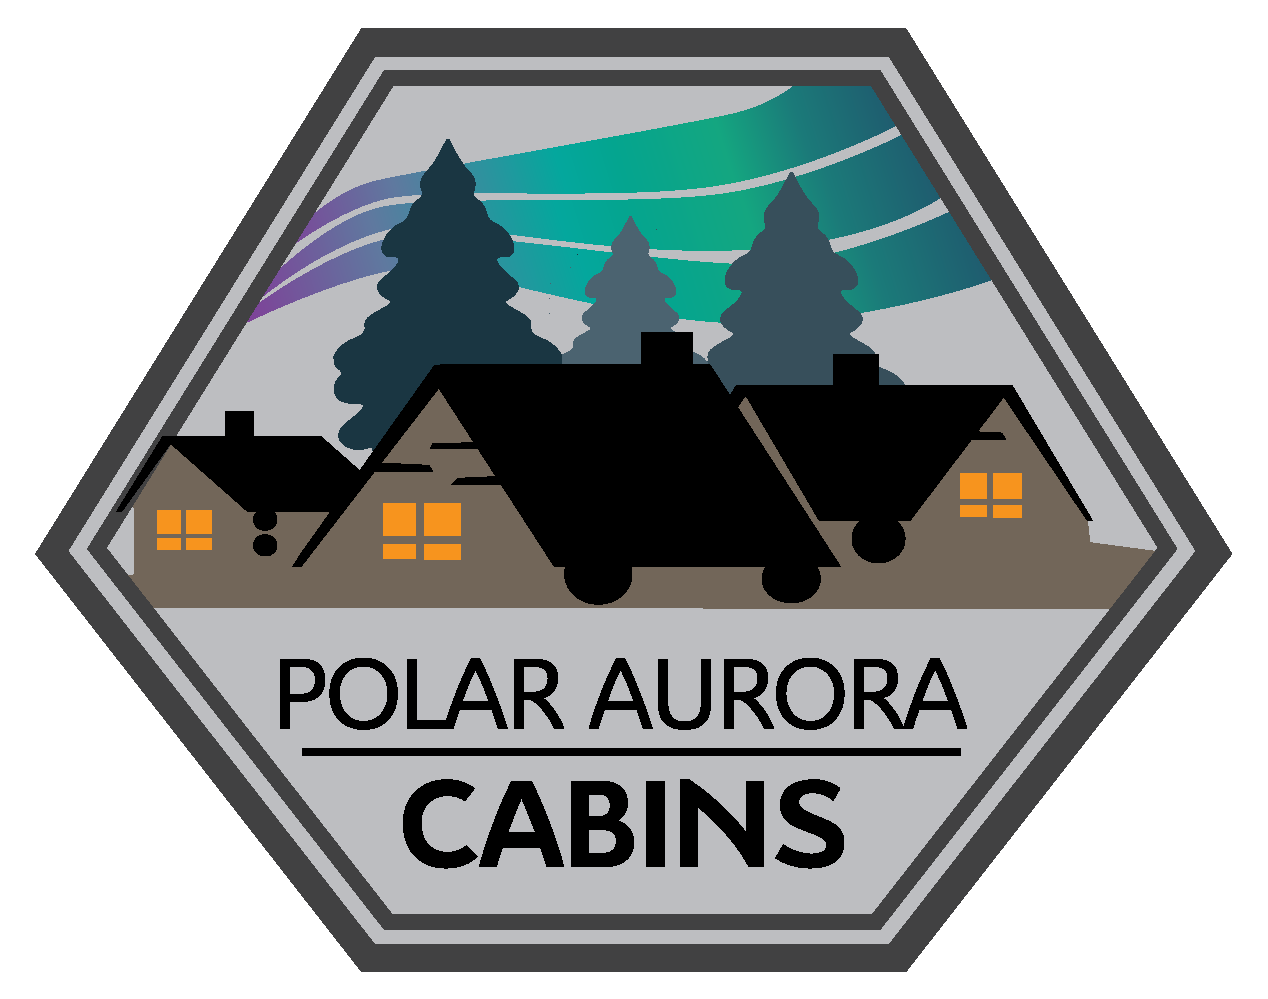 Polar aurora cabins